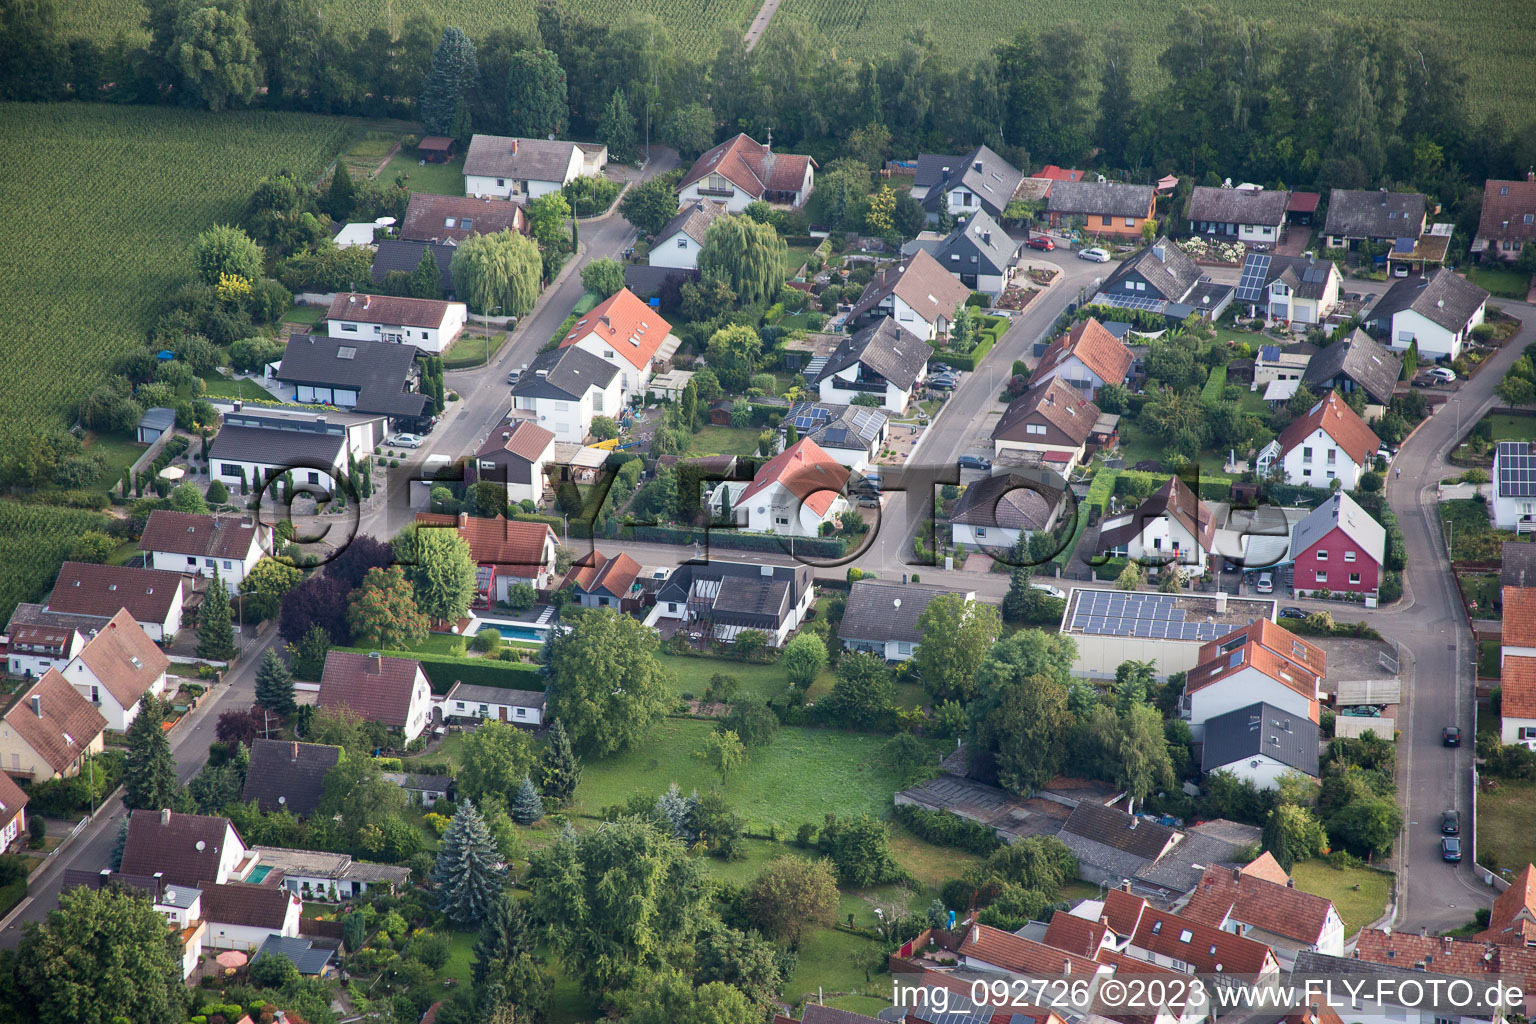 Maxburgstr in the district Billigheim in Billigheim-Ingenheim in the state Rhineland-Palatinate, Germany